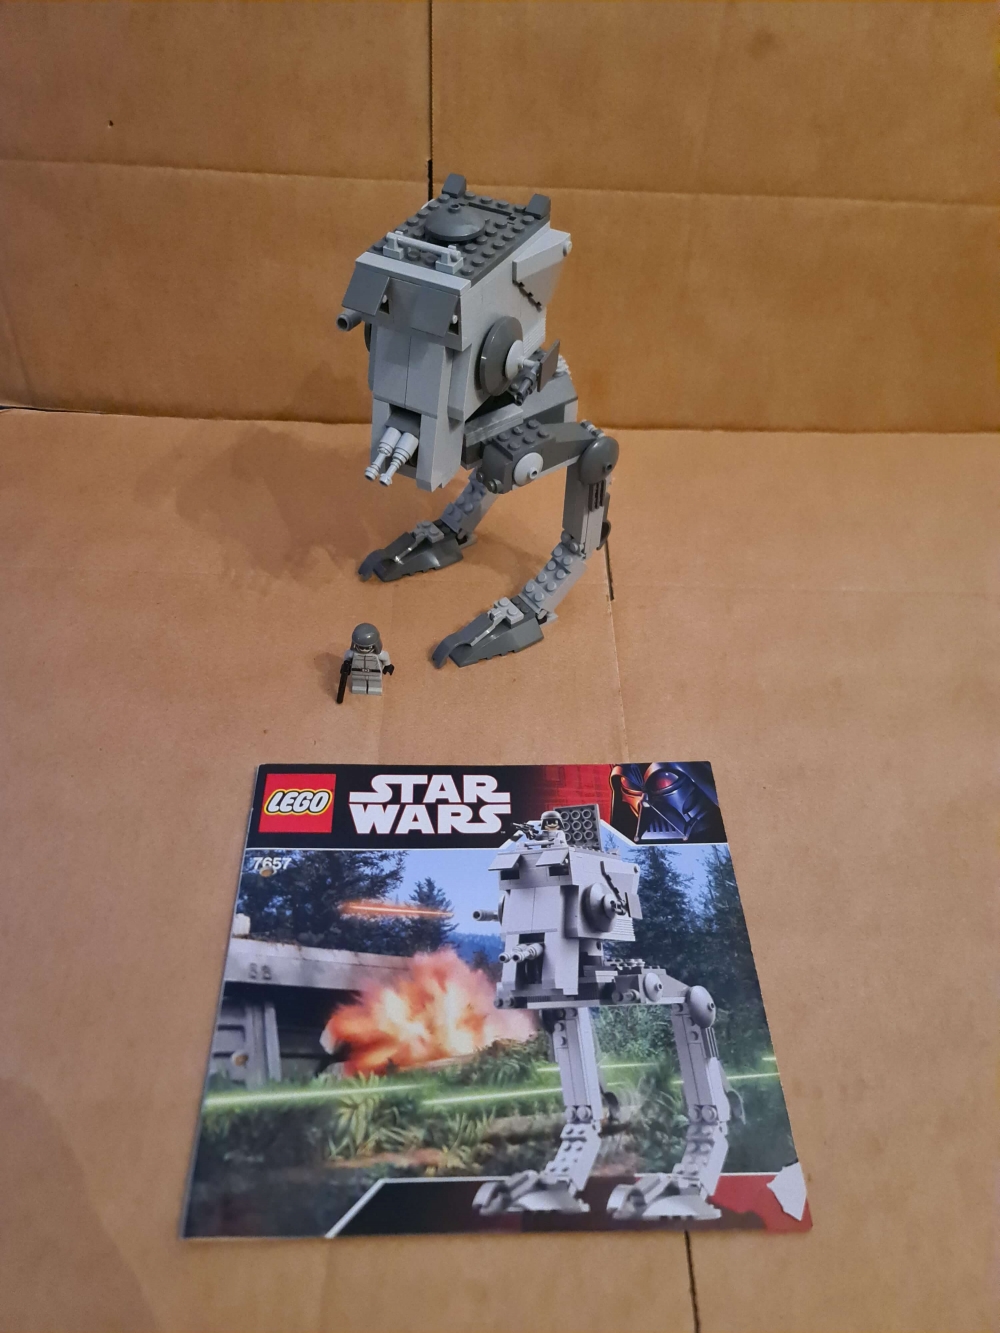 Sett 7657 fra Lego Star Wars : Episode 4/5/6 serien.
Flott sett.
Komplett med manual.